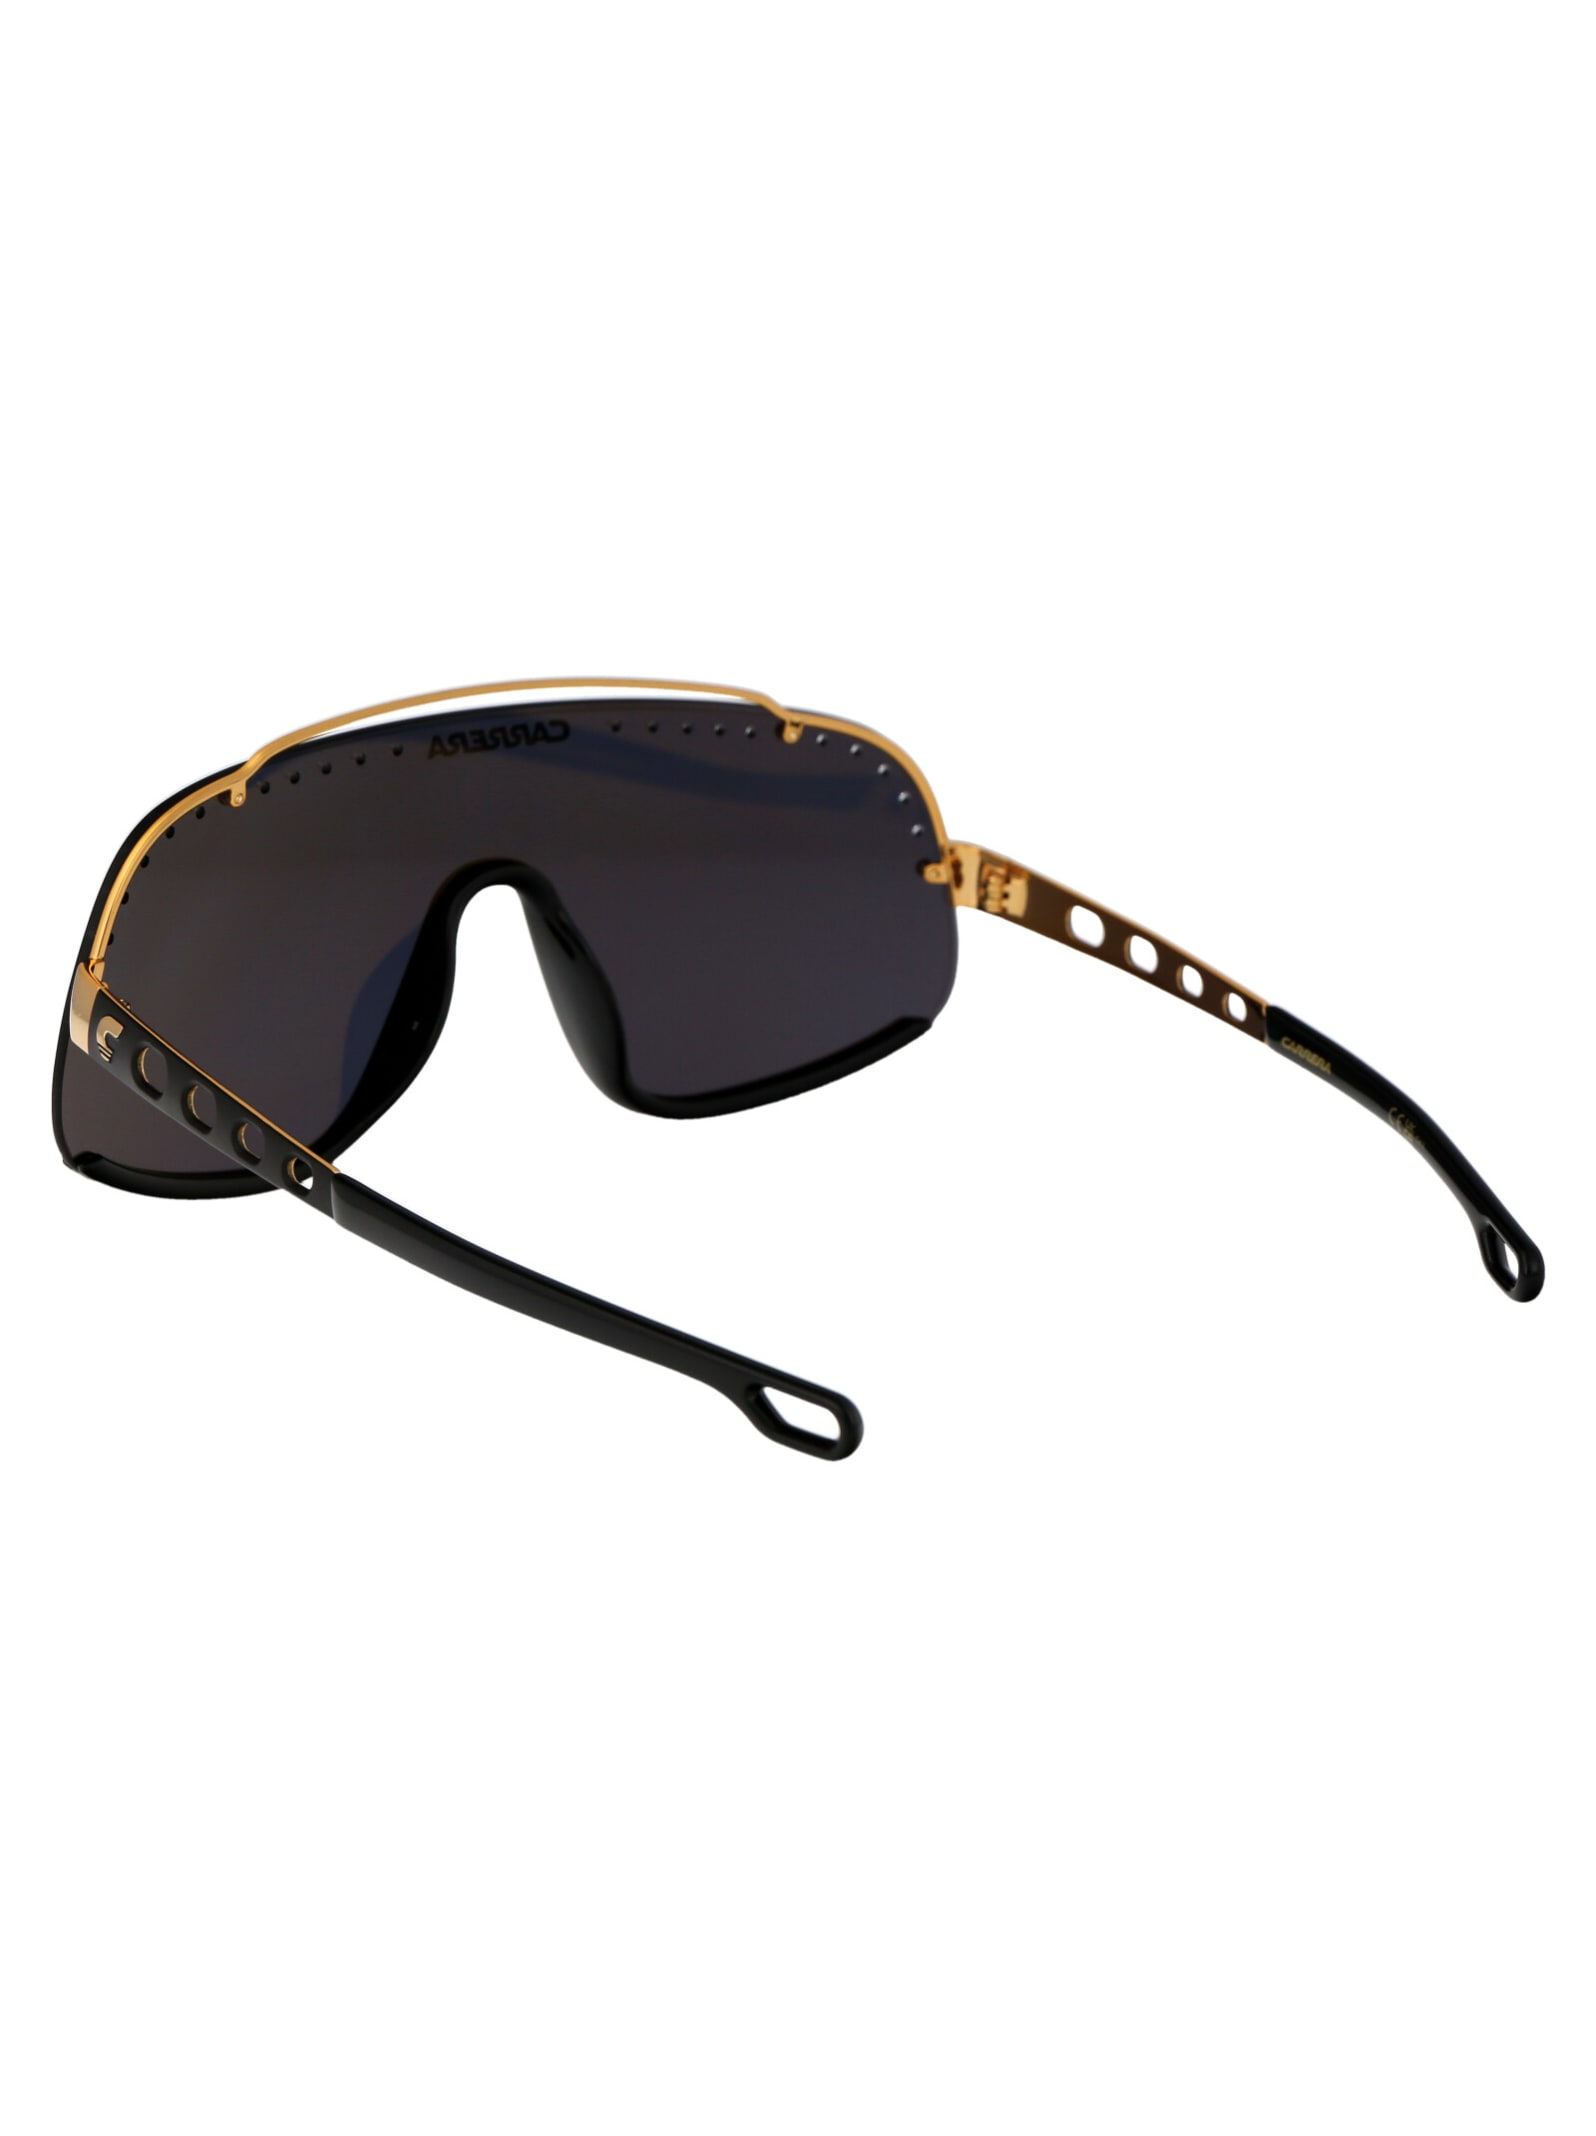 Shop Carrera Flaglab 16 Sunglasses In 2m22k Blk Gold B